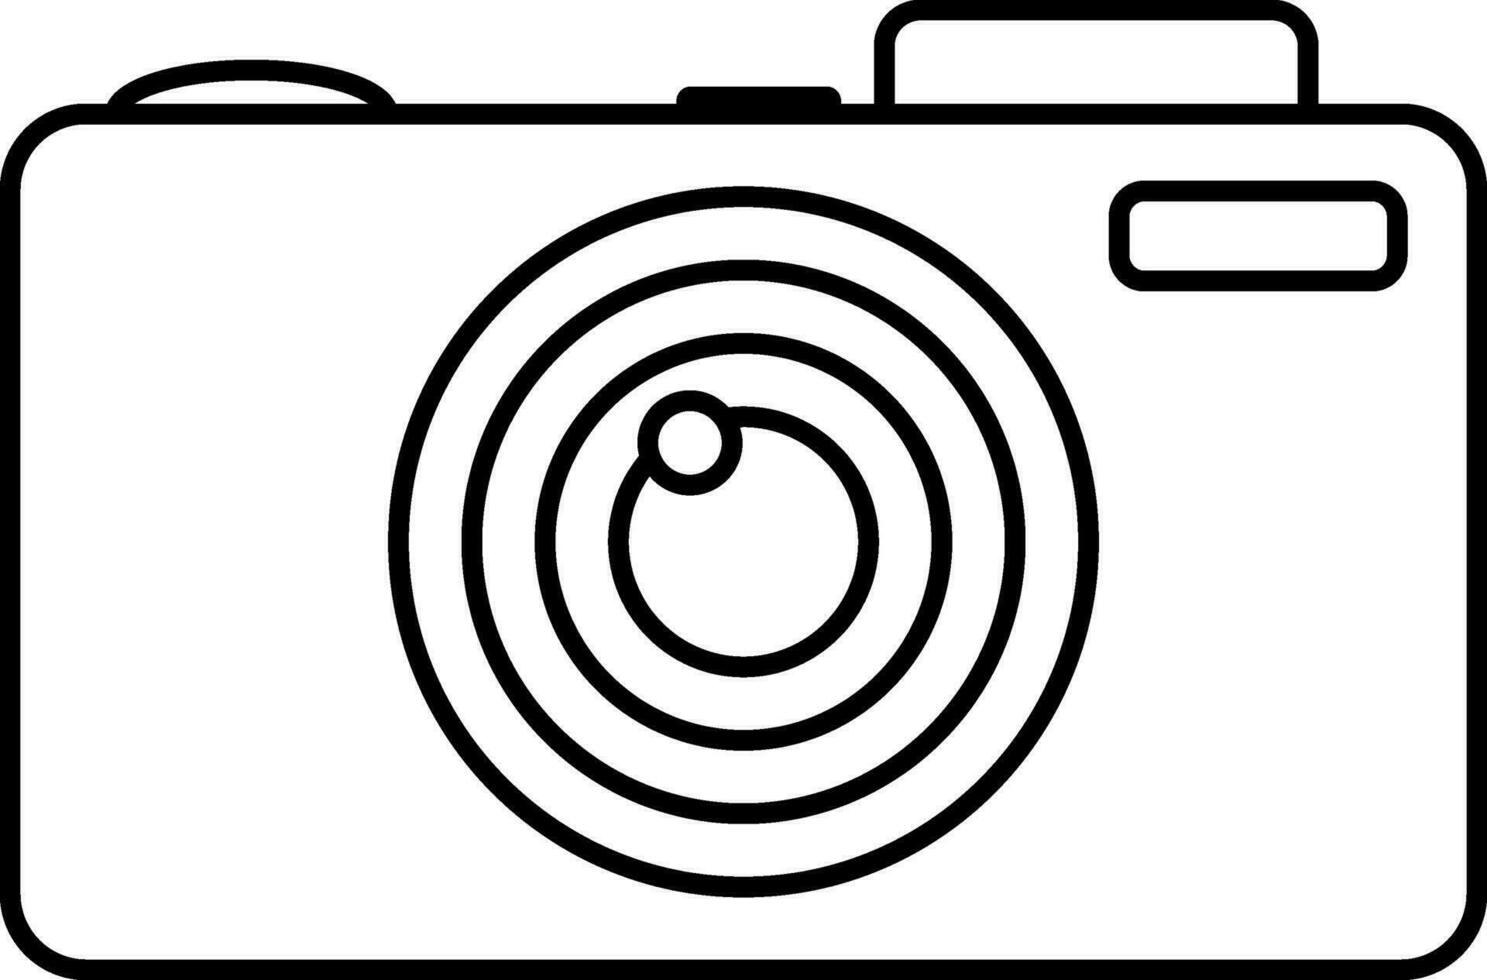 Line artillustration of camera icon. vector